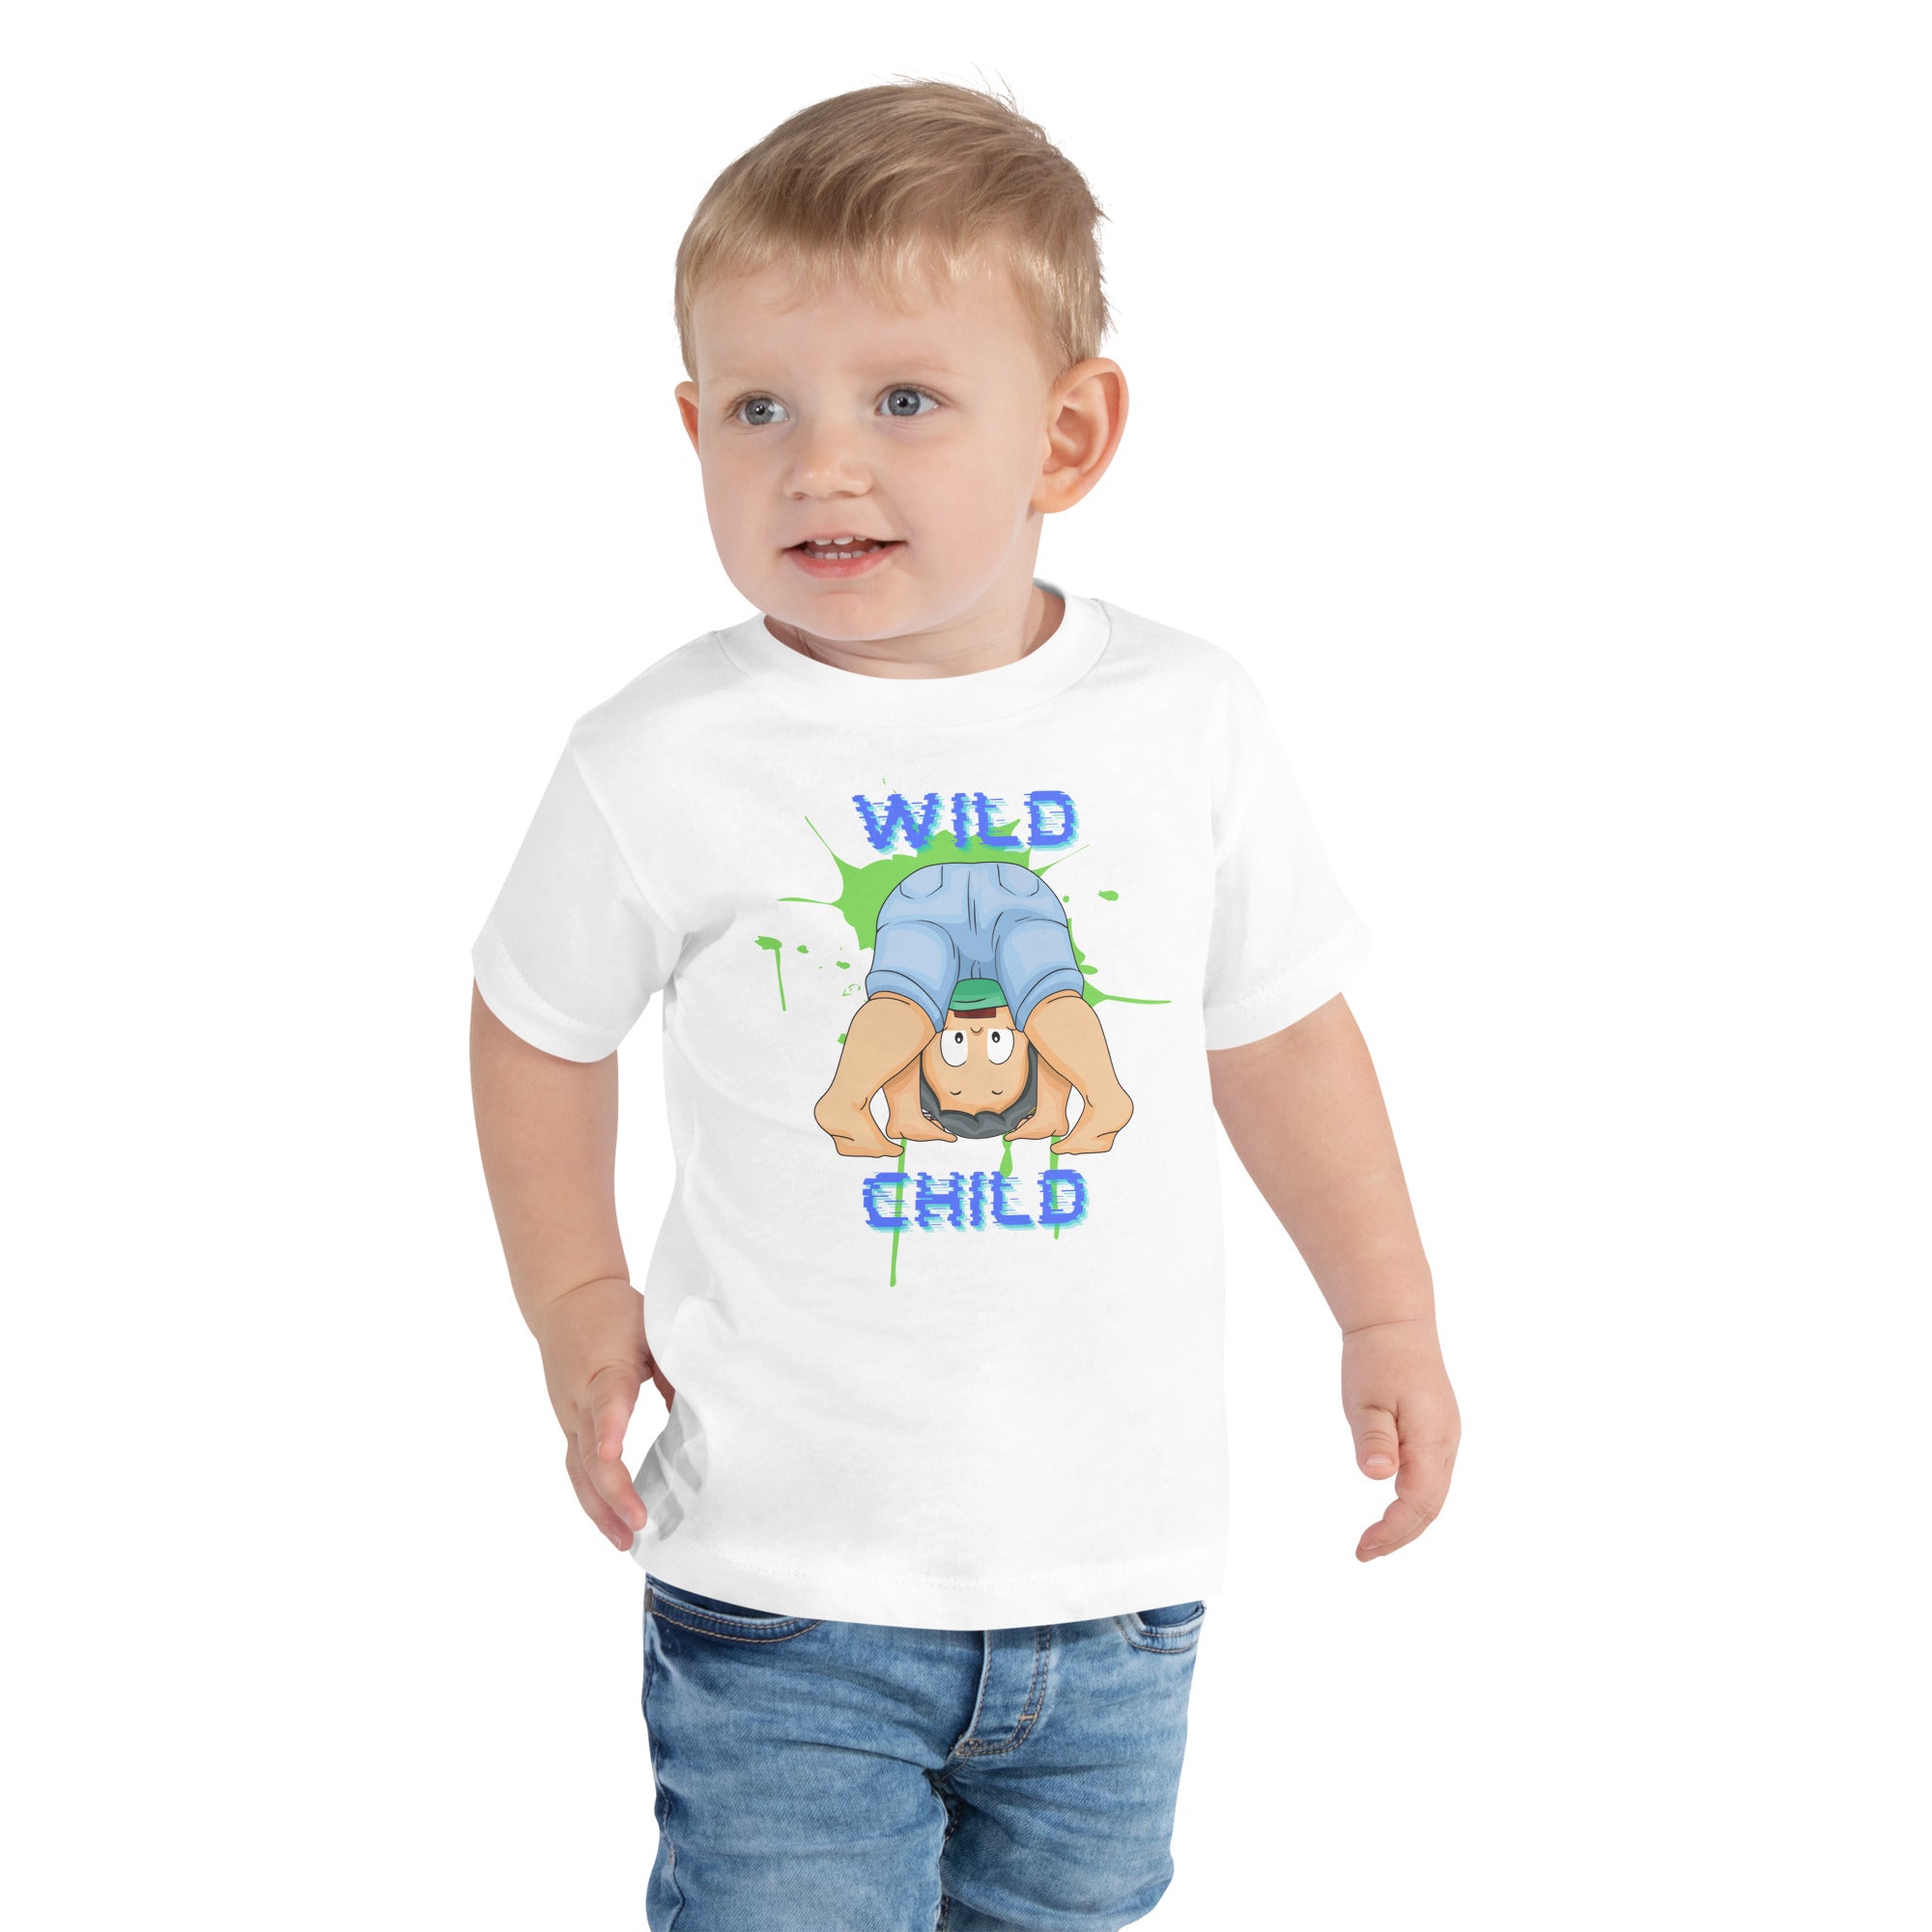 Toddler Short Sleeve Tee - Wild Child (White)